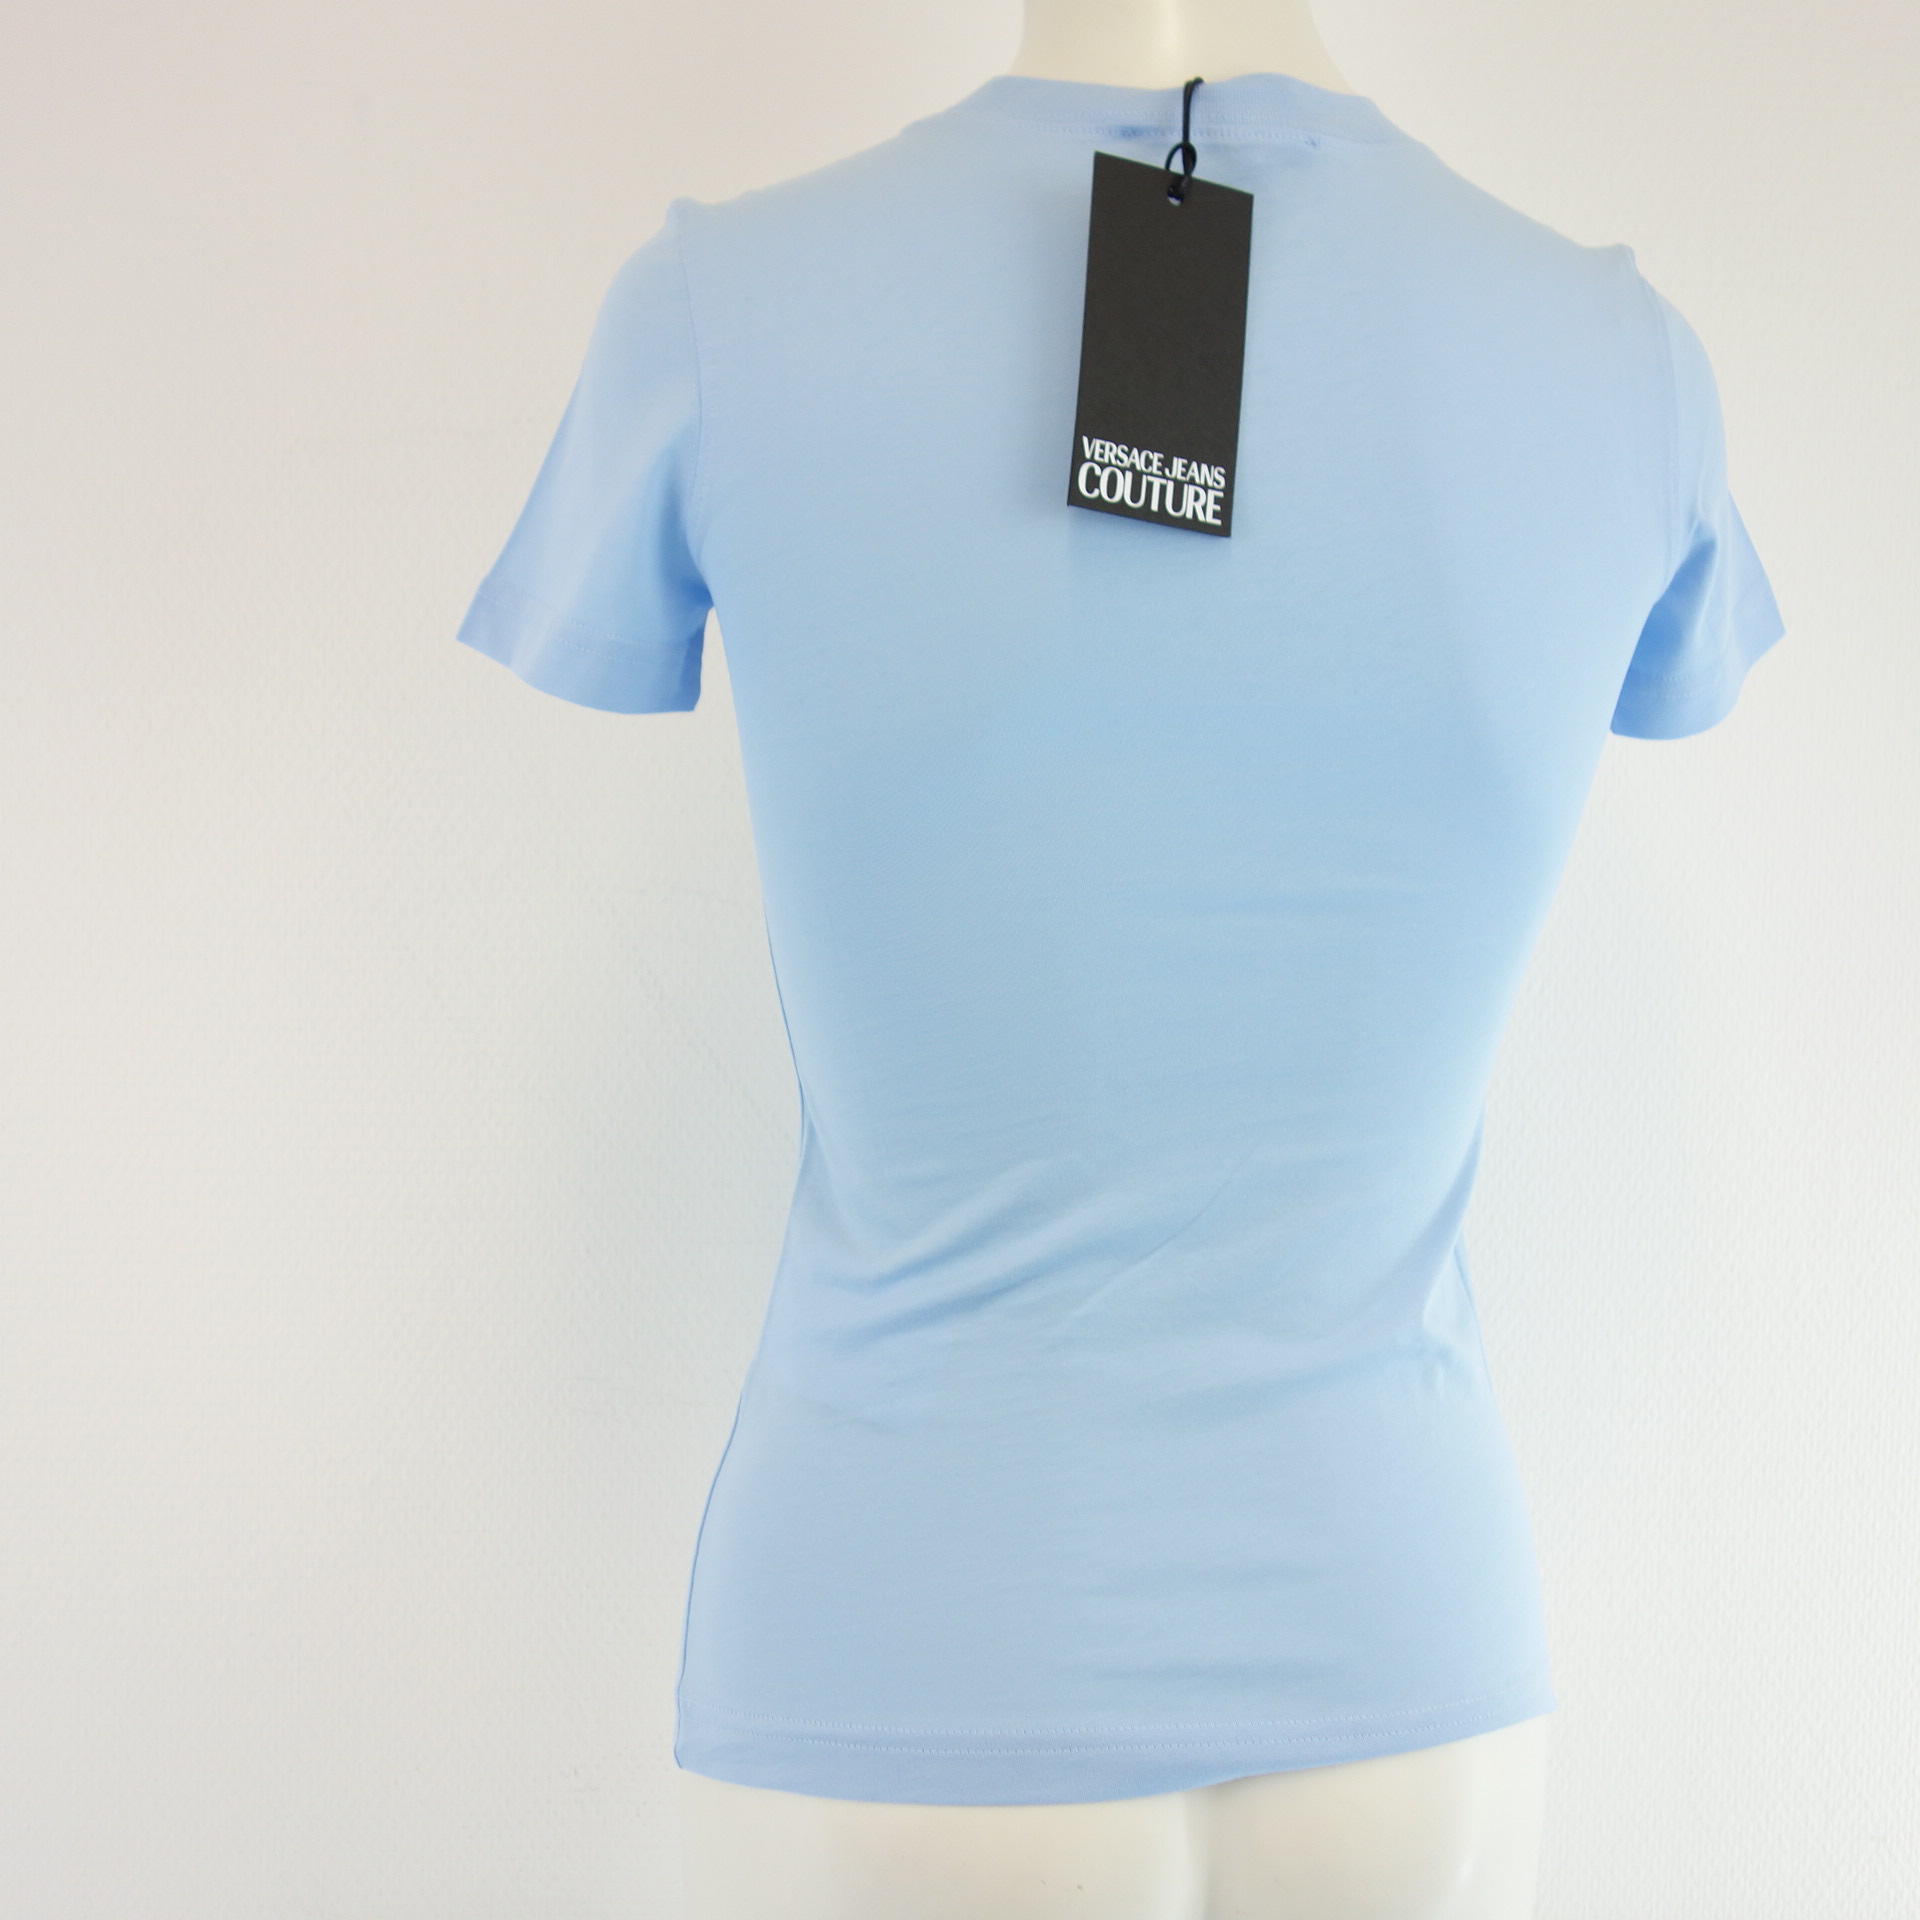 VERSACE JEANS COUTURE Damen Shirt T-Shirt Oberteil Blau Slim Print 